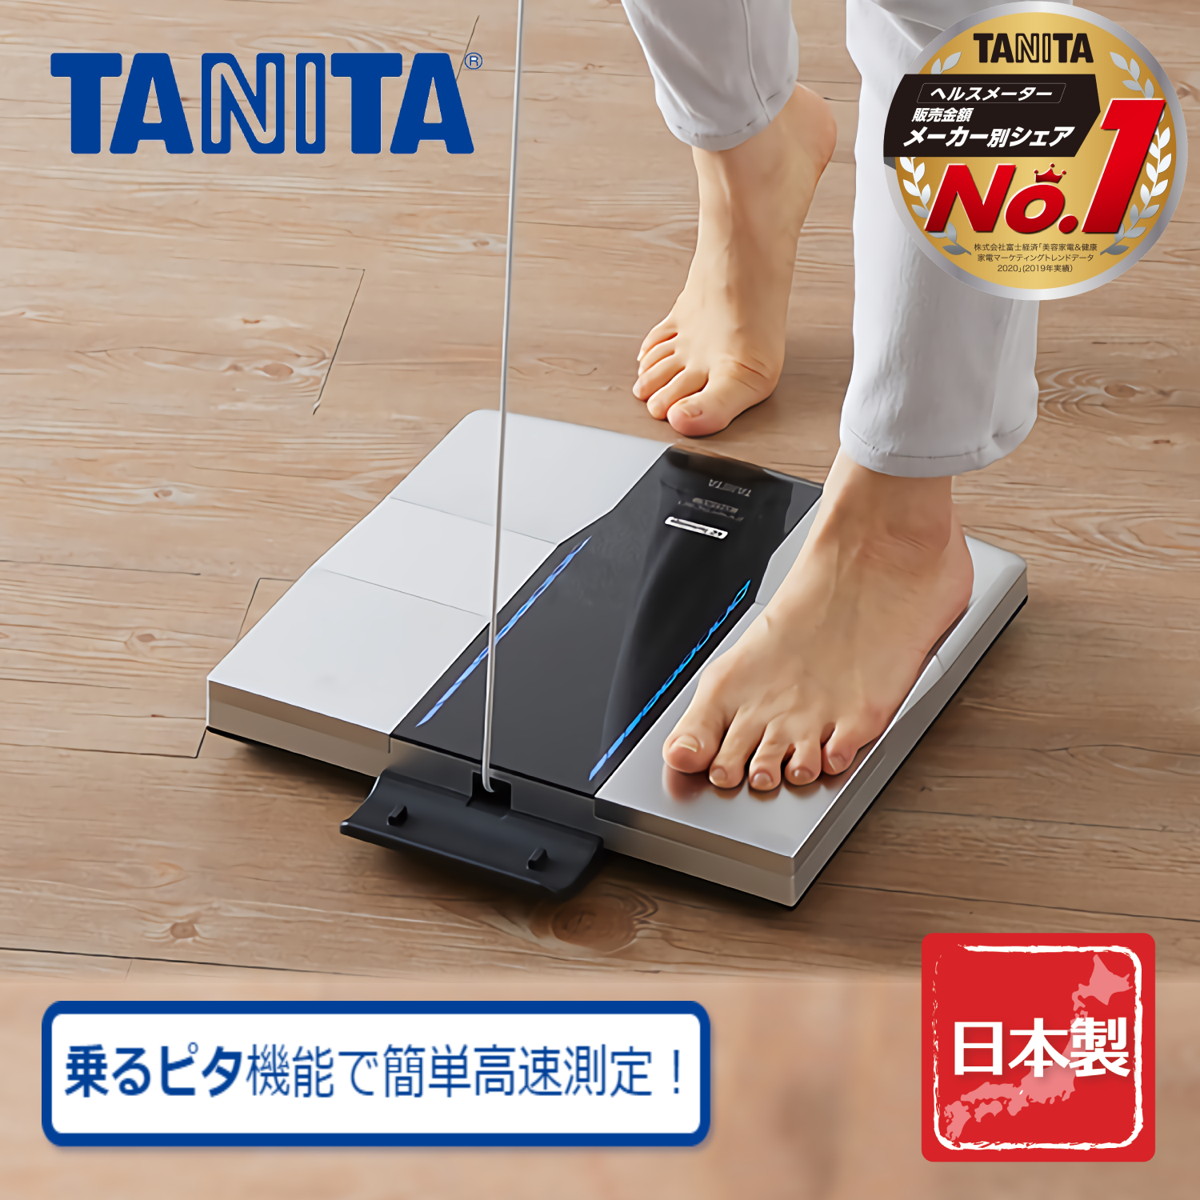 TANITA 体組成計 体重計 innerScan DUAL インナースキャンデュアル ブラック スマホ連動 日本製 左右部位別測定